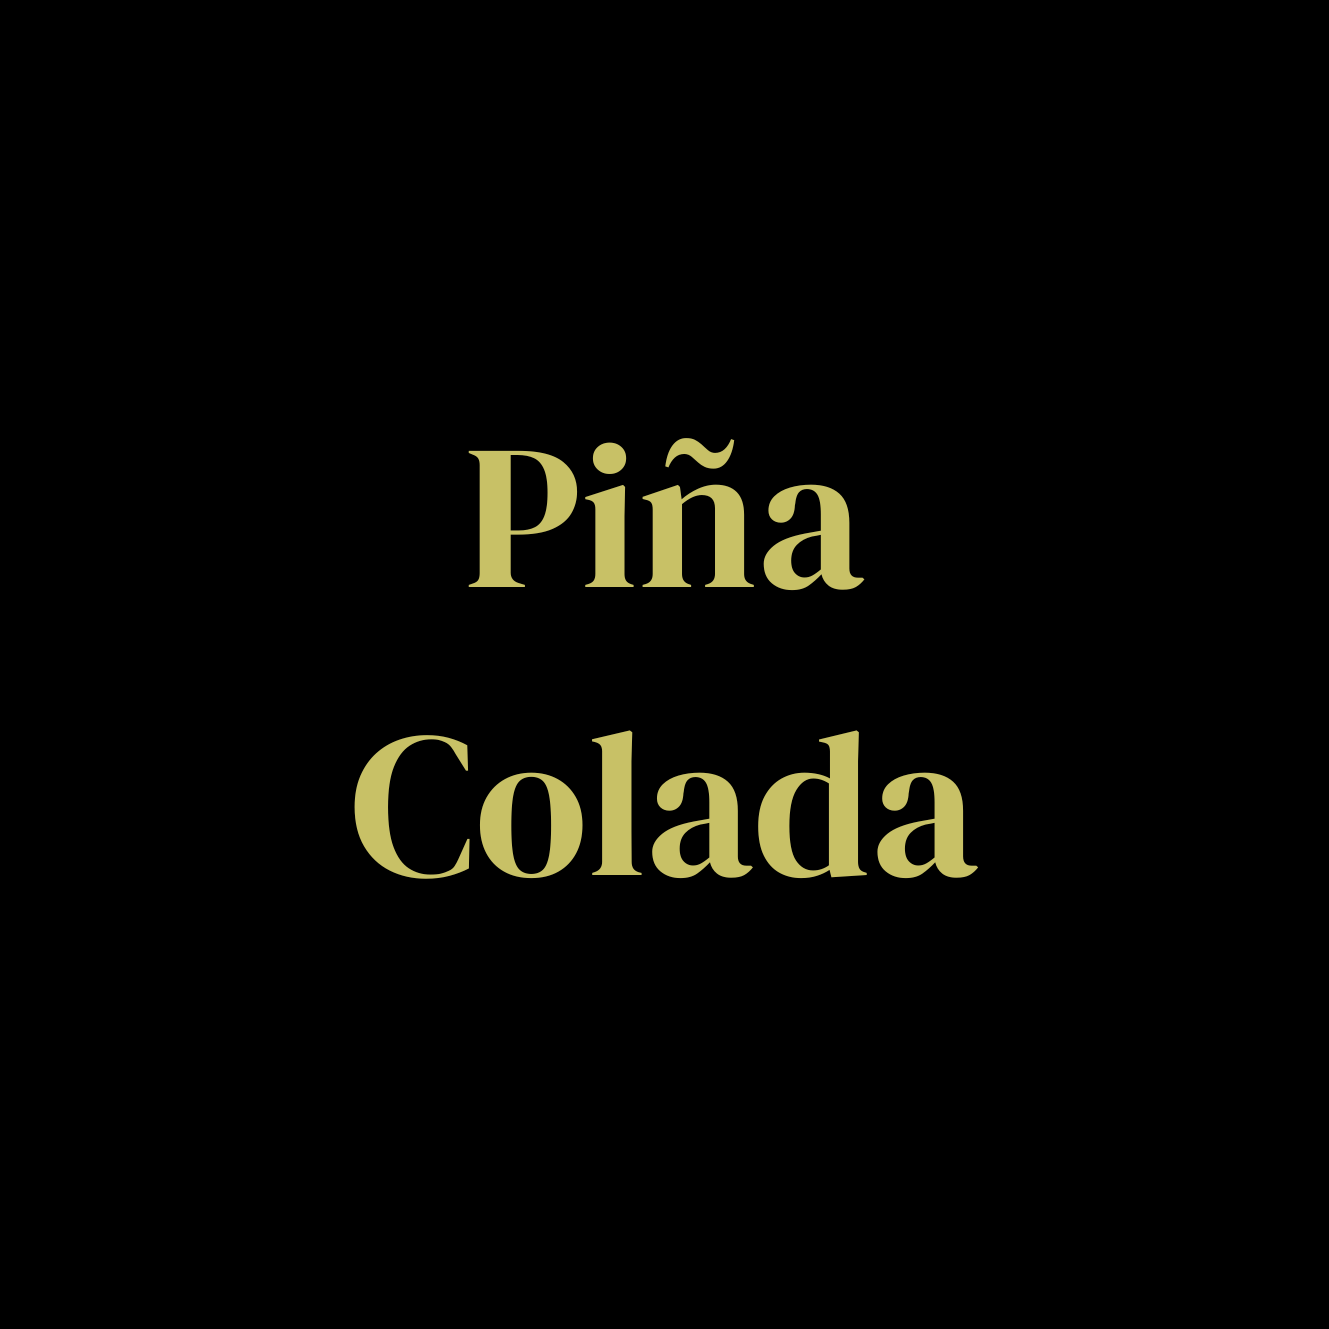 PINA COLADA - The Melt House